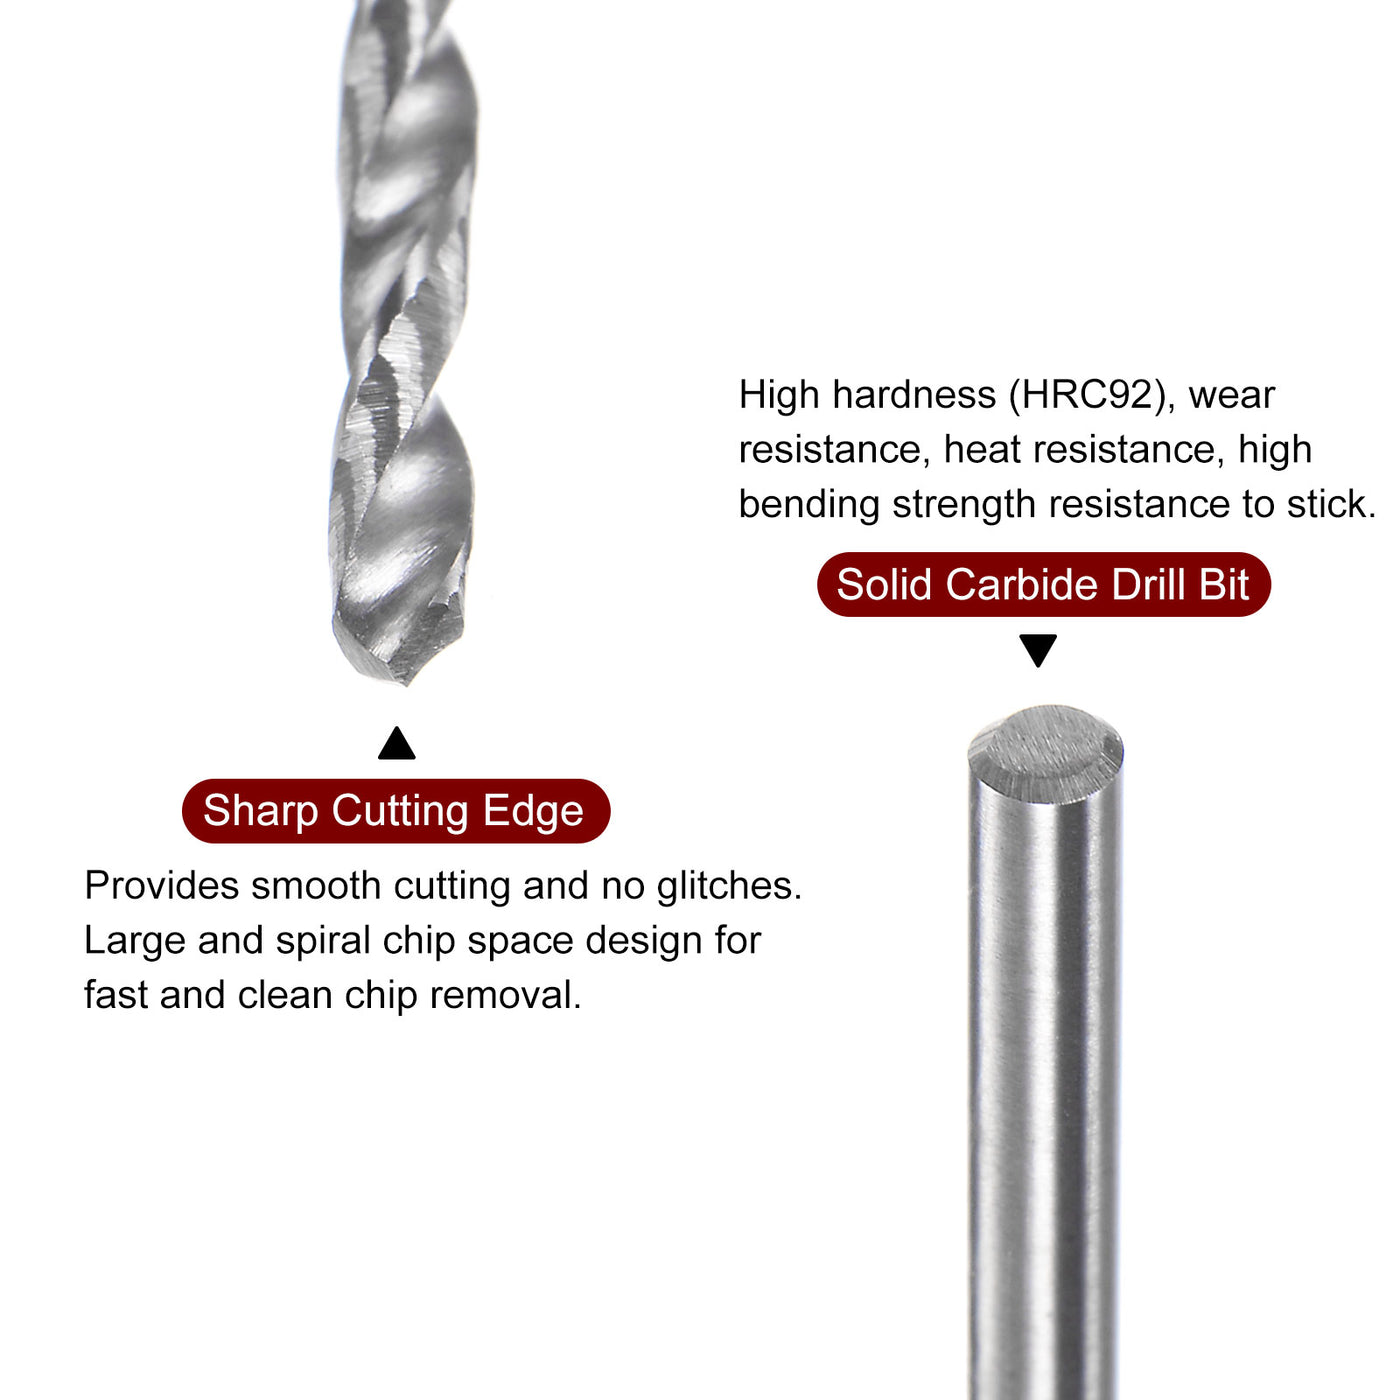 Harfington 2pcs 1.65mm C3/K10 Tungsten Carbide Precision Straight Shank Twist Drill Bit